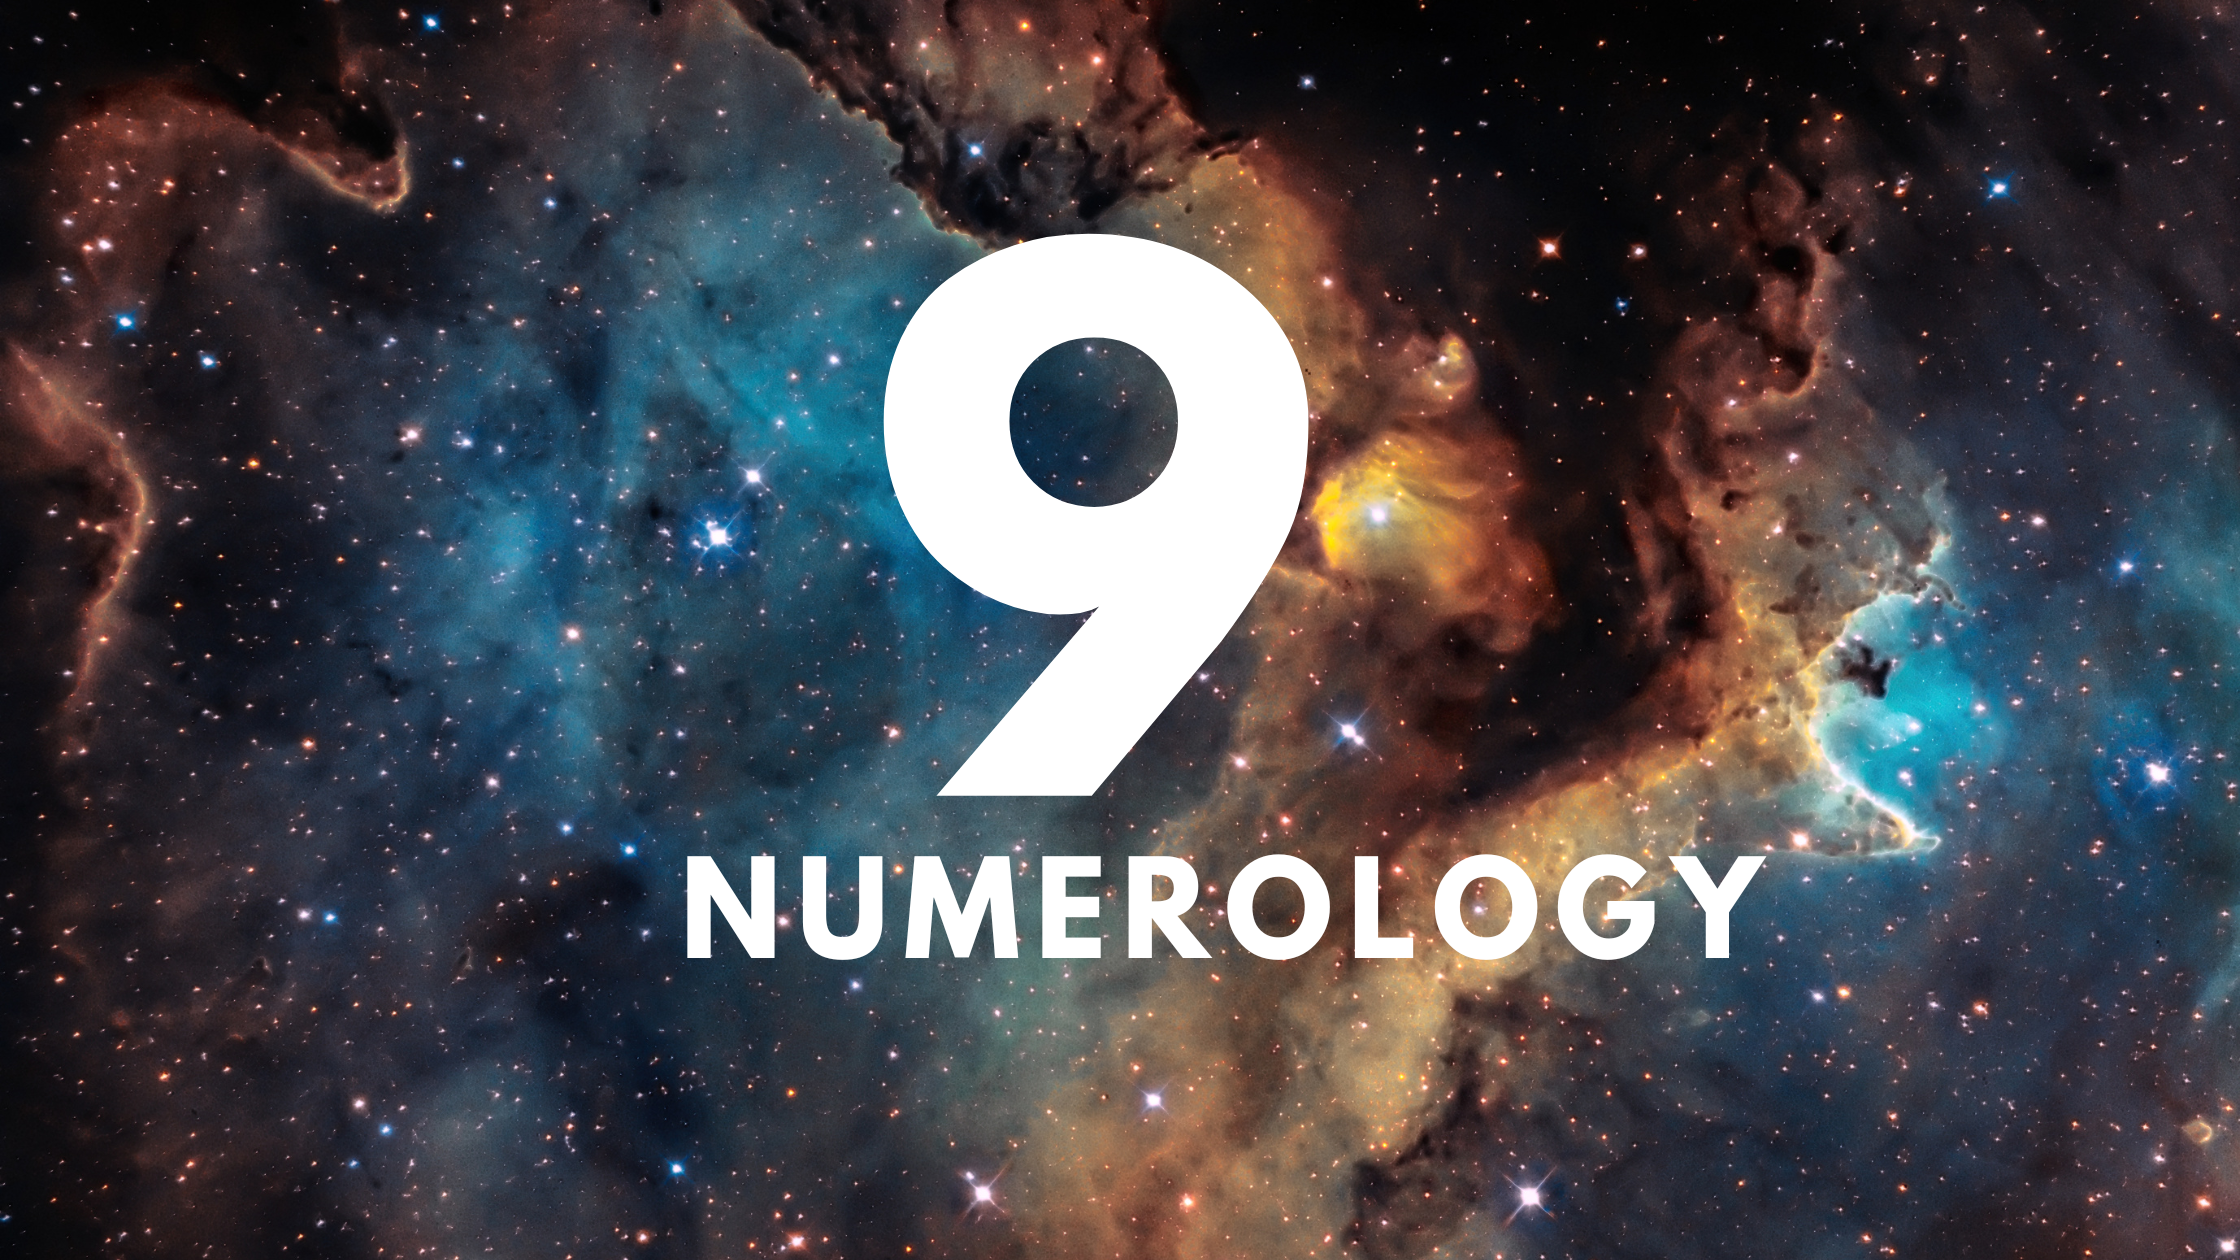 Numerology 9